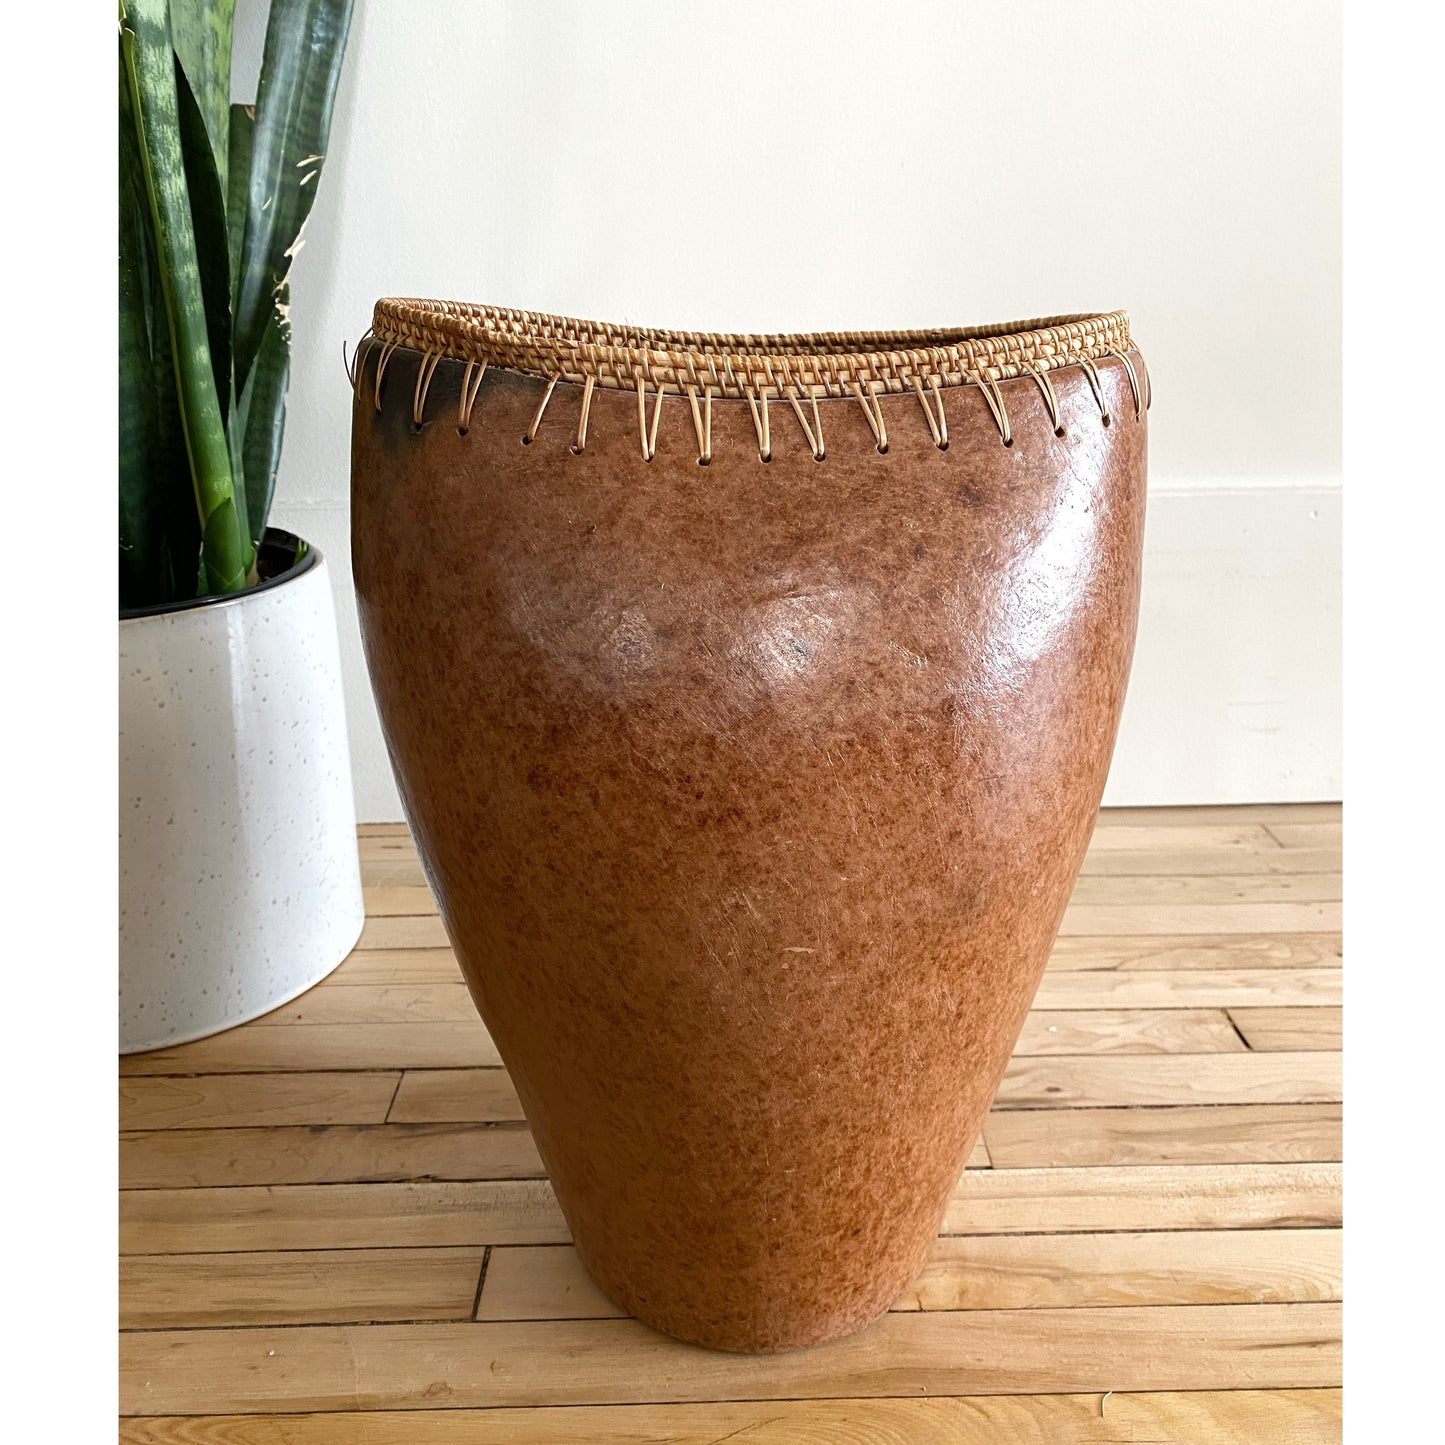 Oversized Vintage Clay Vase with Rattan Edge